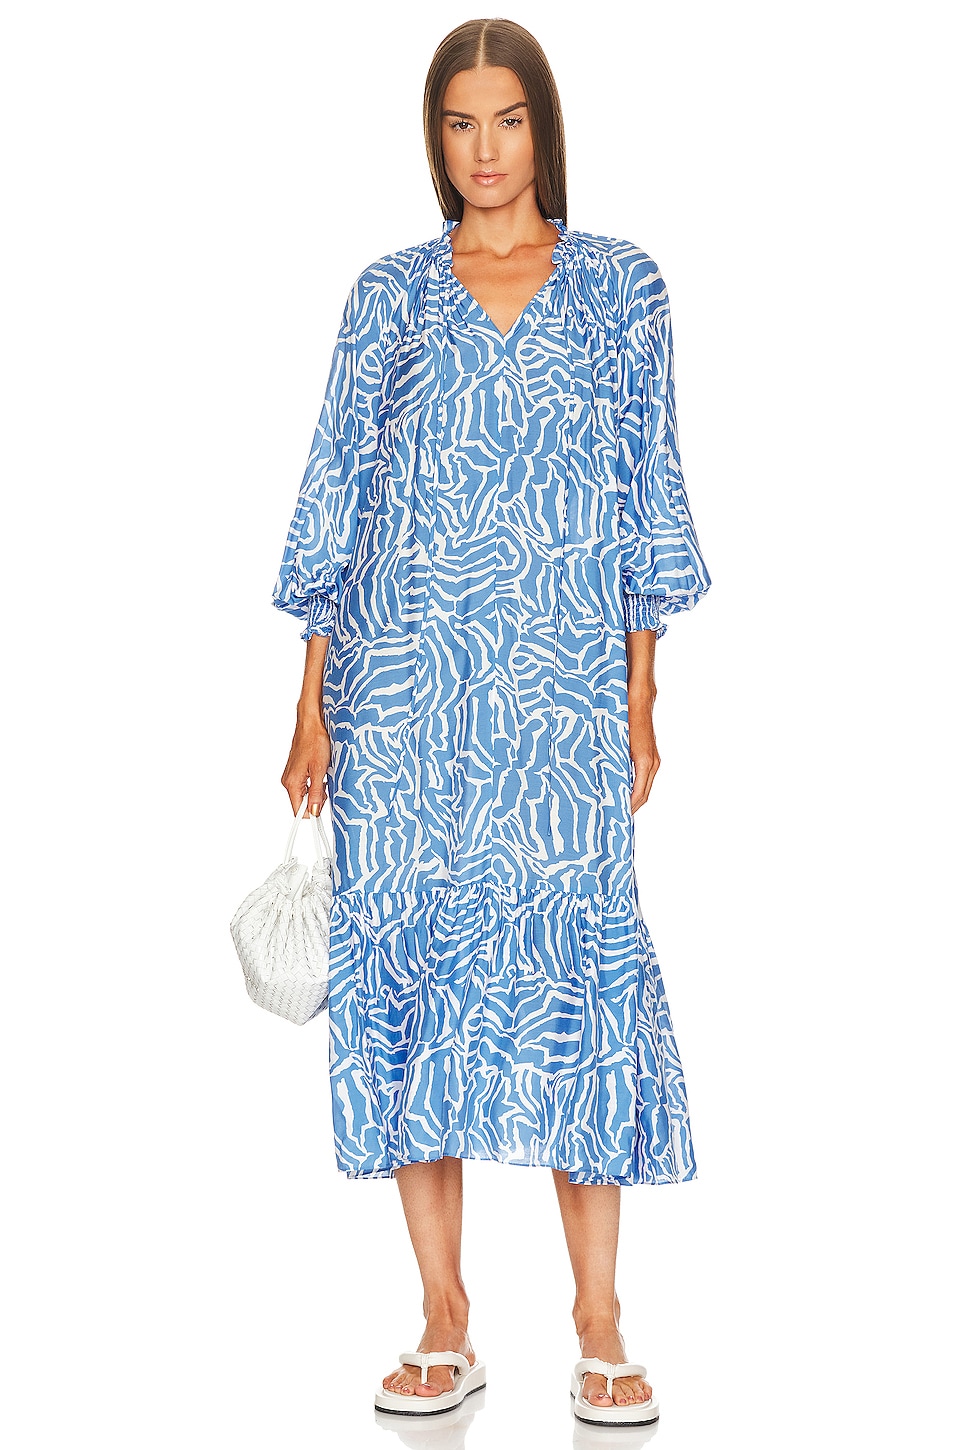 Diane von Furstenberg Fortina Dress in April Tiger Signature Blue